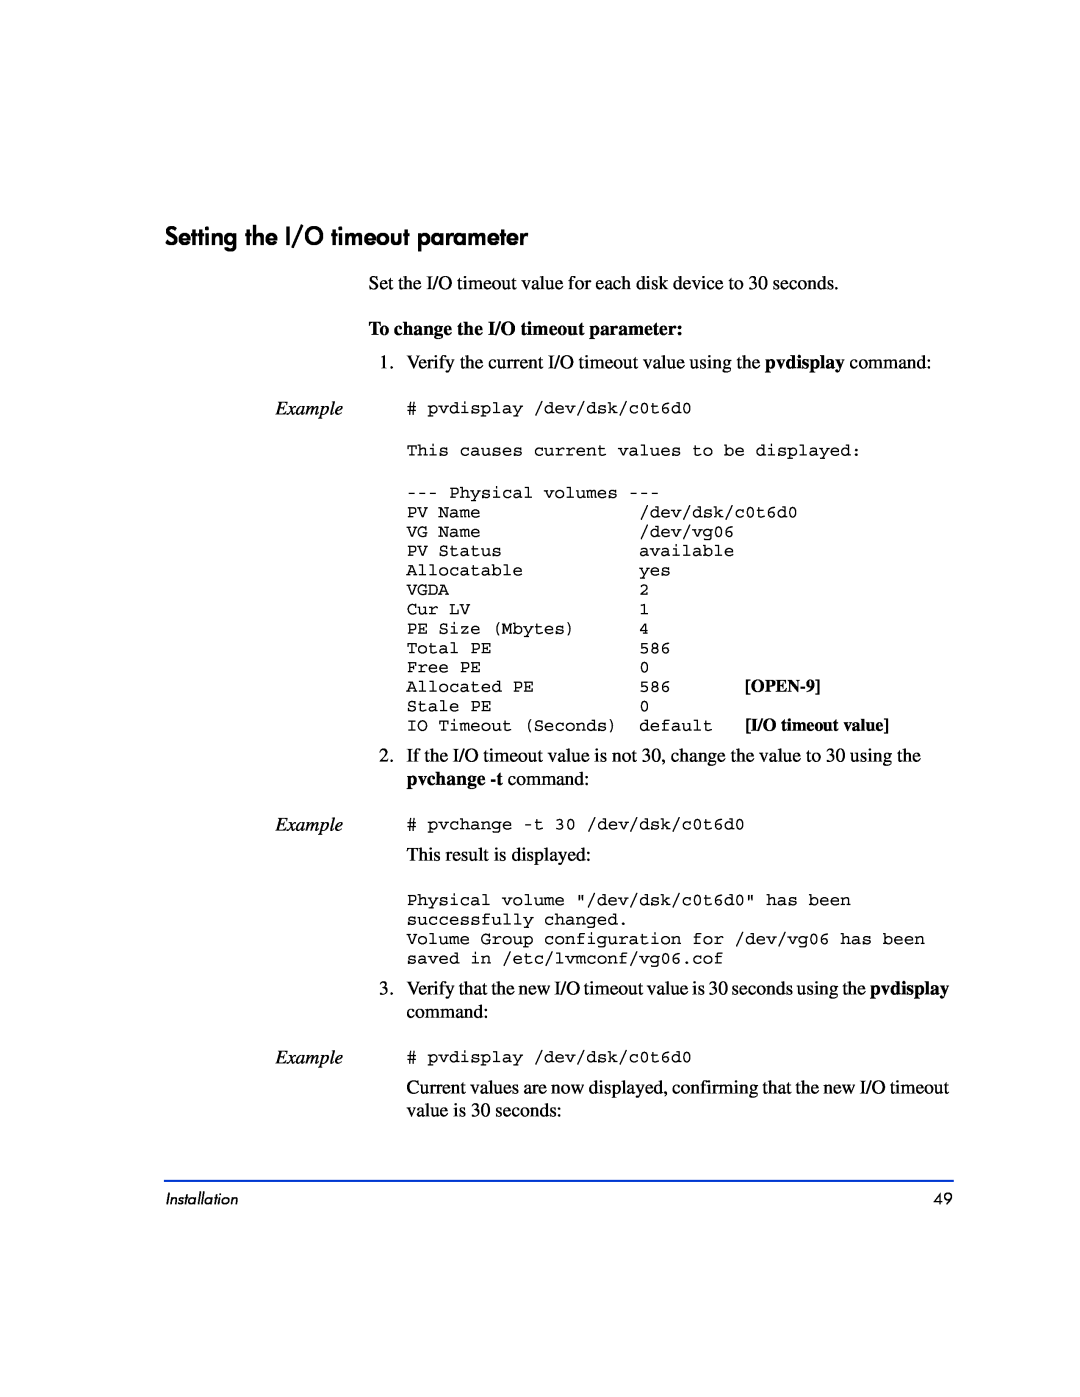 HP XP10000, XP128 manual Setting the I/O timeout parameter, To change the I/O timeout parameter 